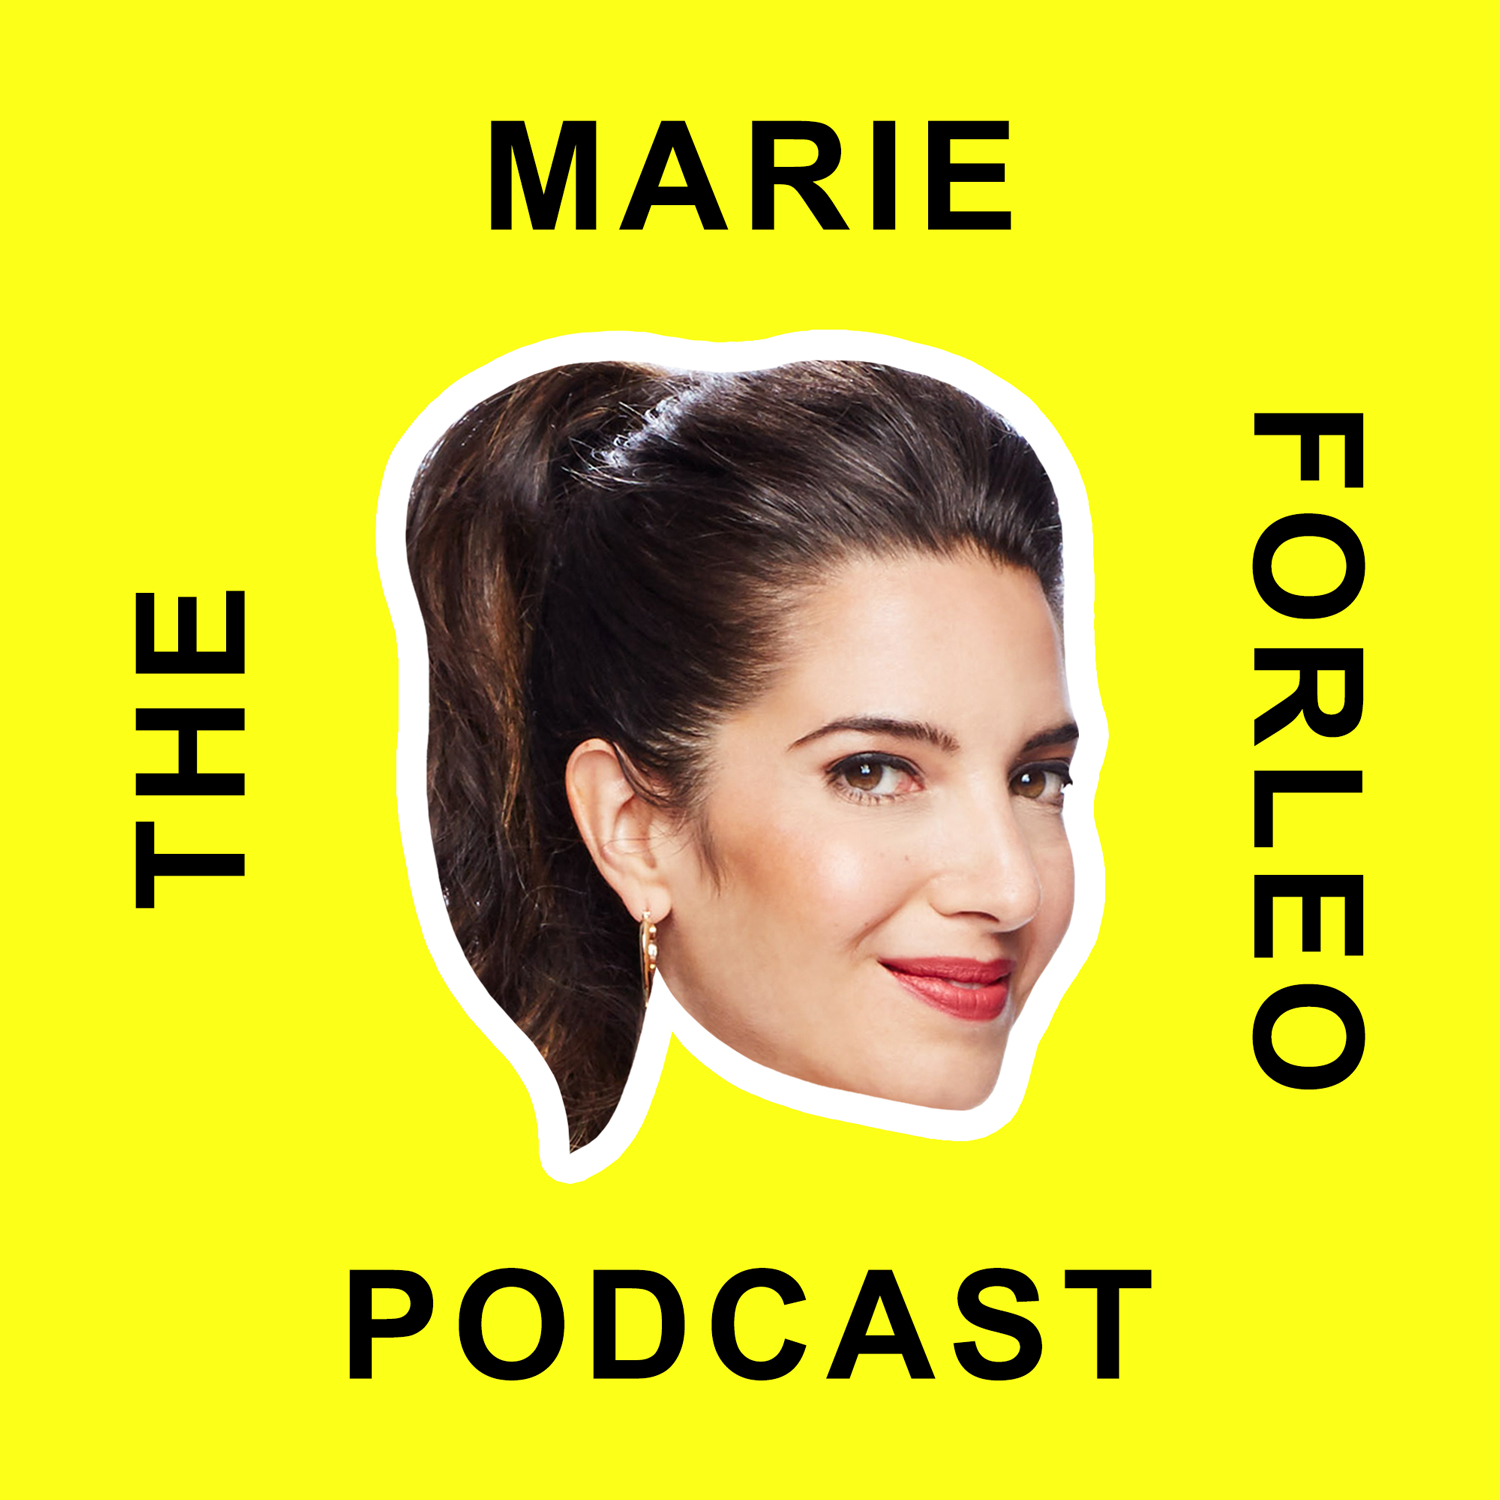 Marie Forleo Introduces Brené Brown